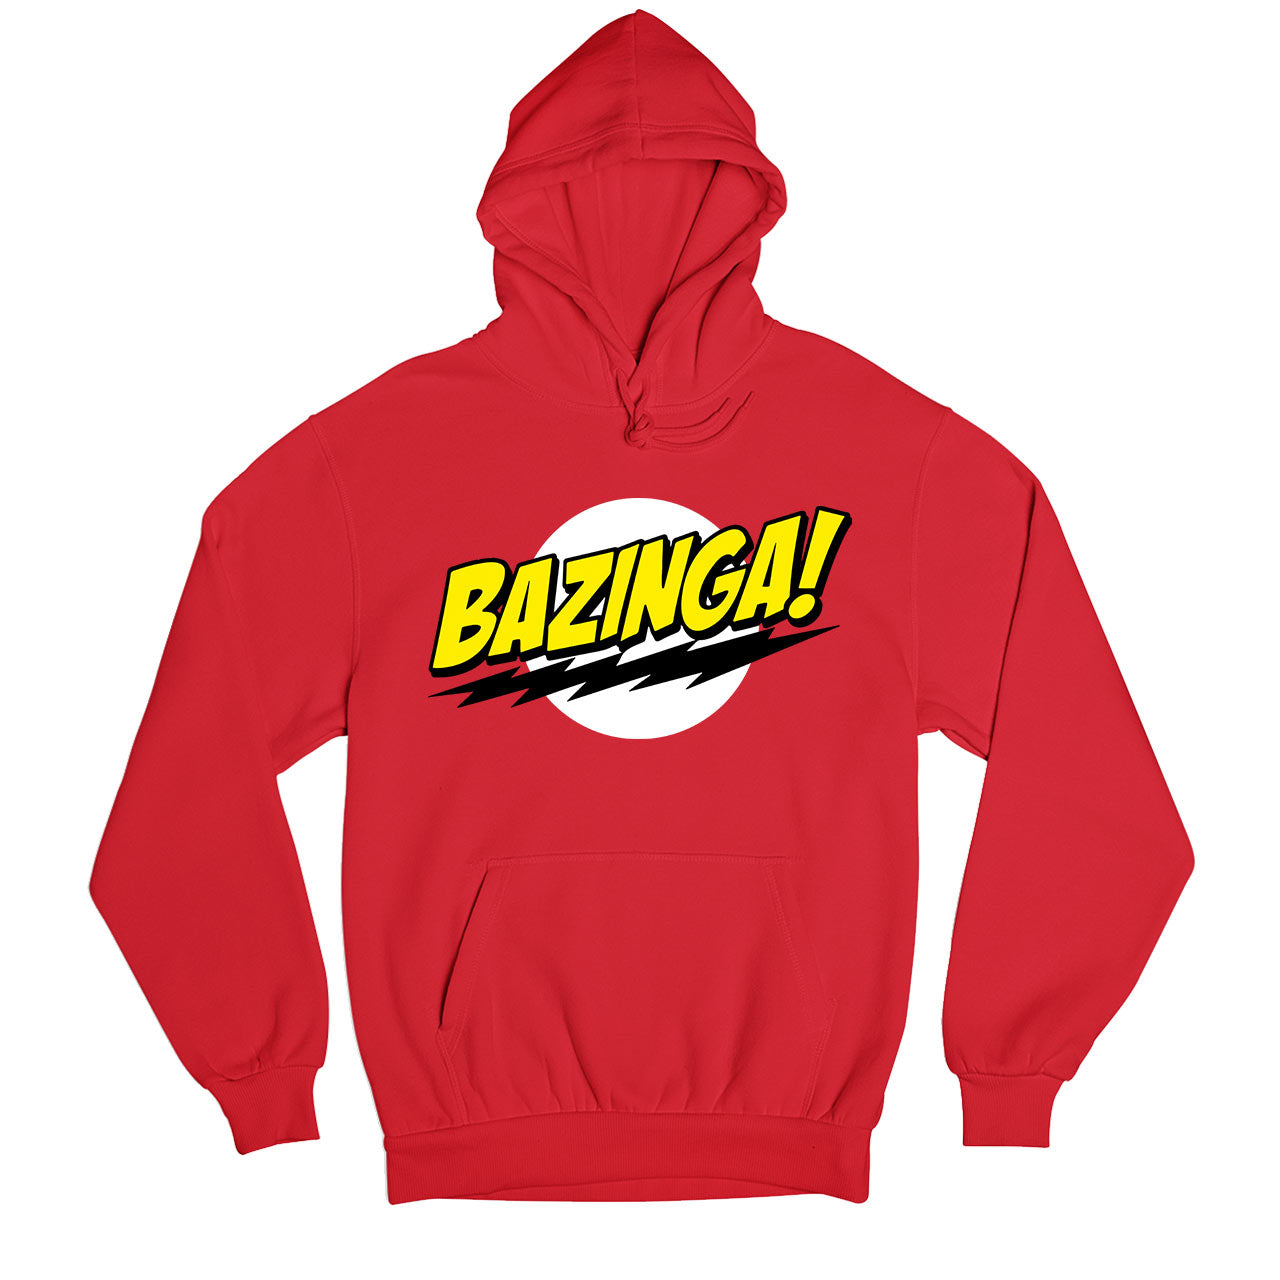 The Big Bang Theory Hoodie - Bazinga Hoodie Hooded Sweatshirt The Banyan Tee TBT